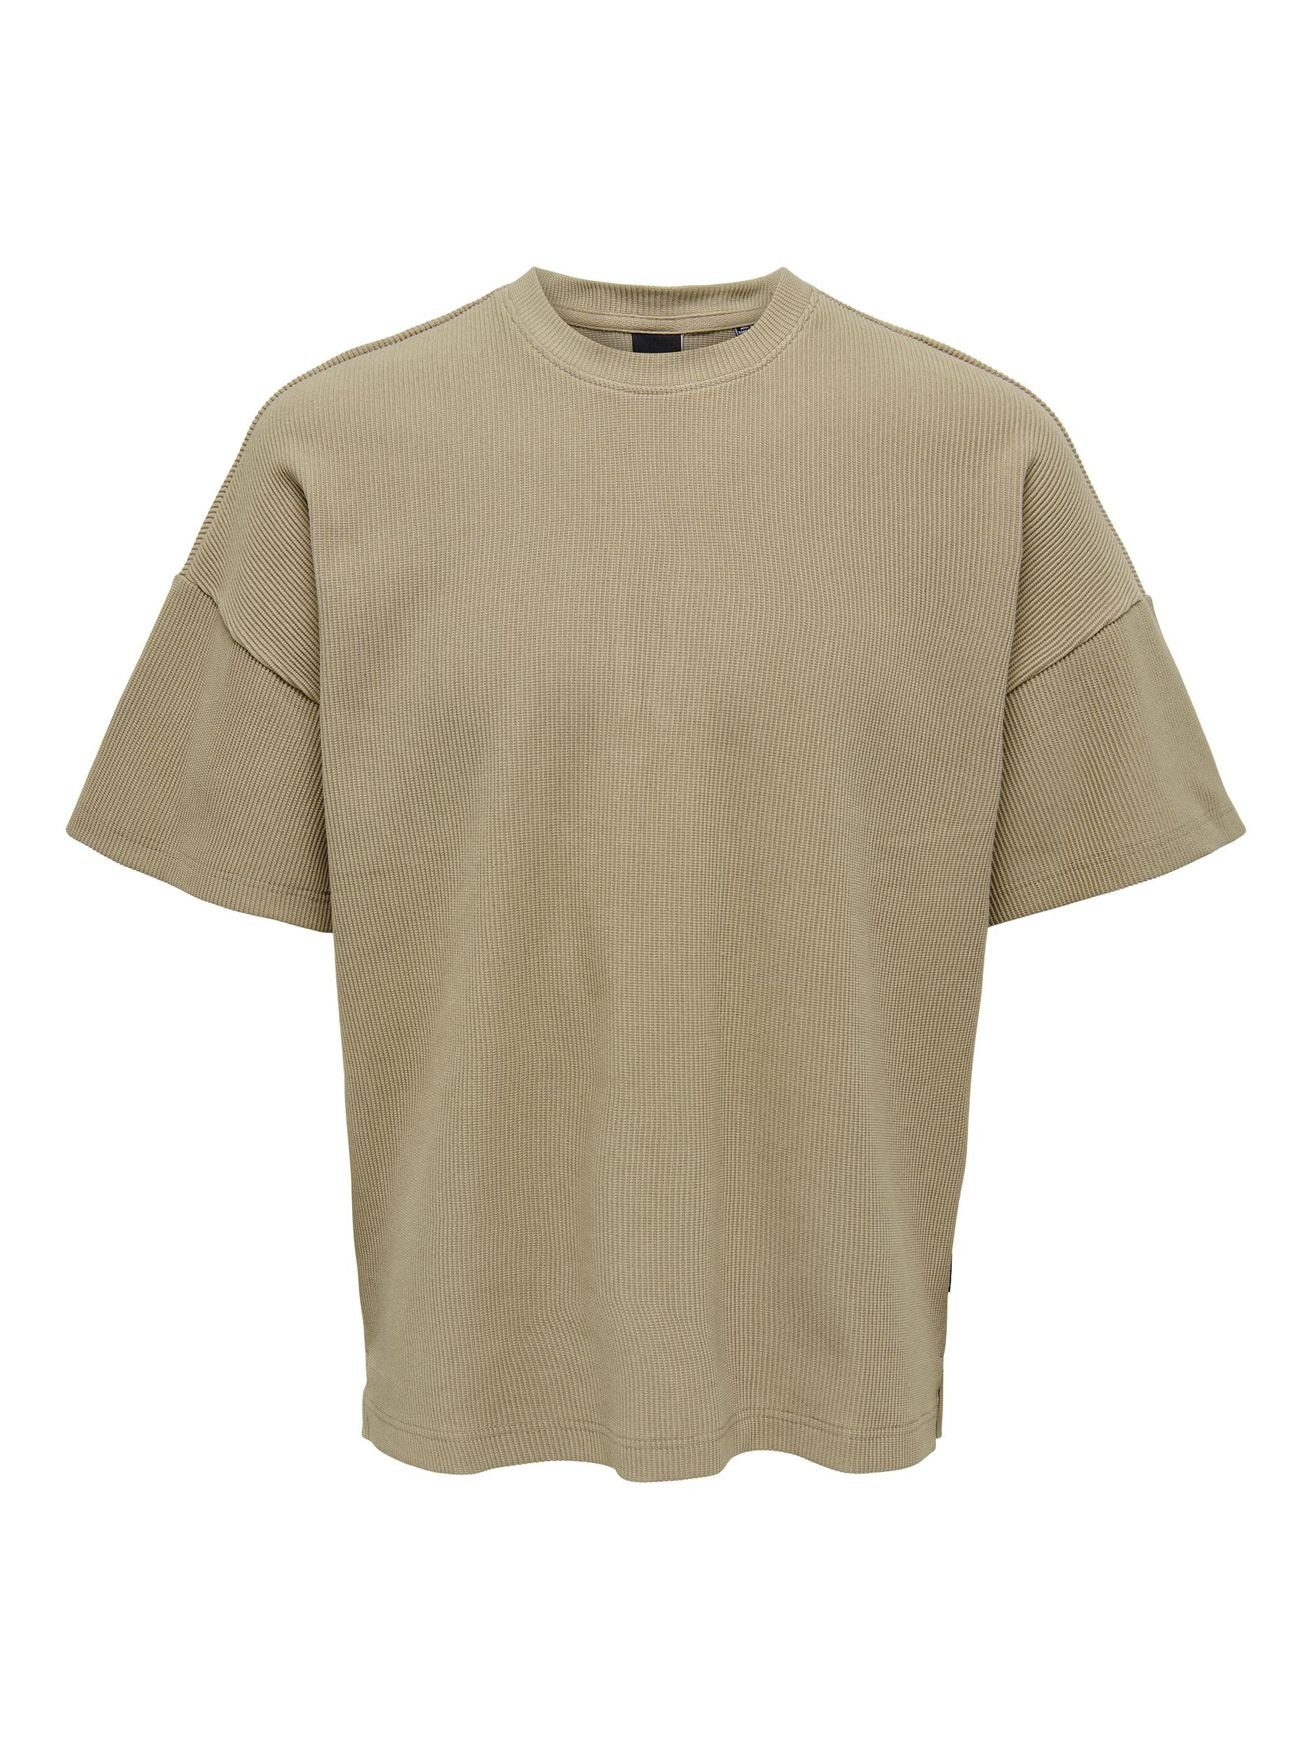 ONLY & SONS T-Shirt Weites Rundhals T-Shirt Kurzarm Basic Shirt ONSBERKELEY 4791 in Beige